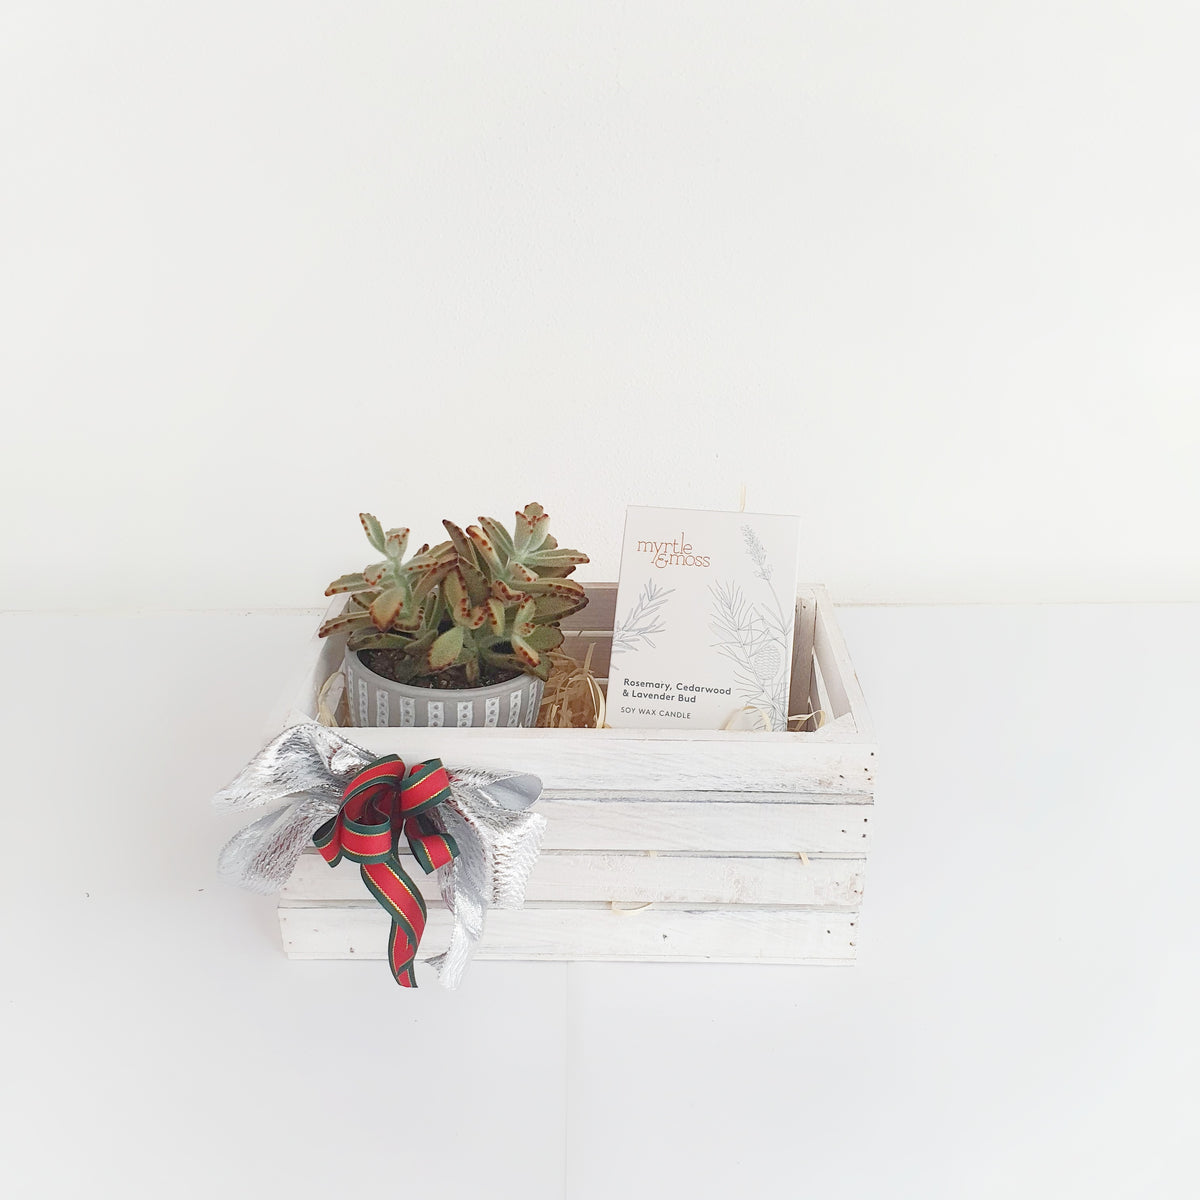 Succulent "Brown thumb" Christmas gift box Sydney